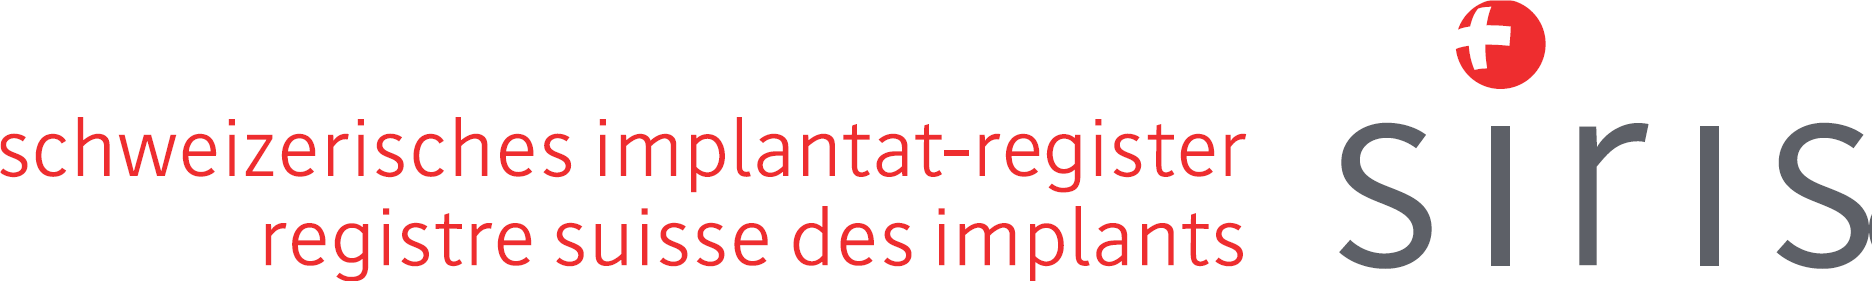 Swiss Implant Register - SIRIS